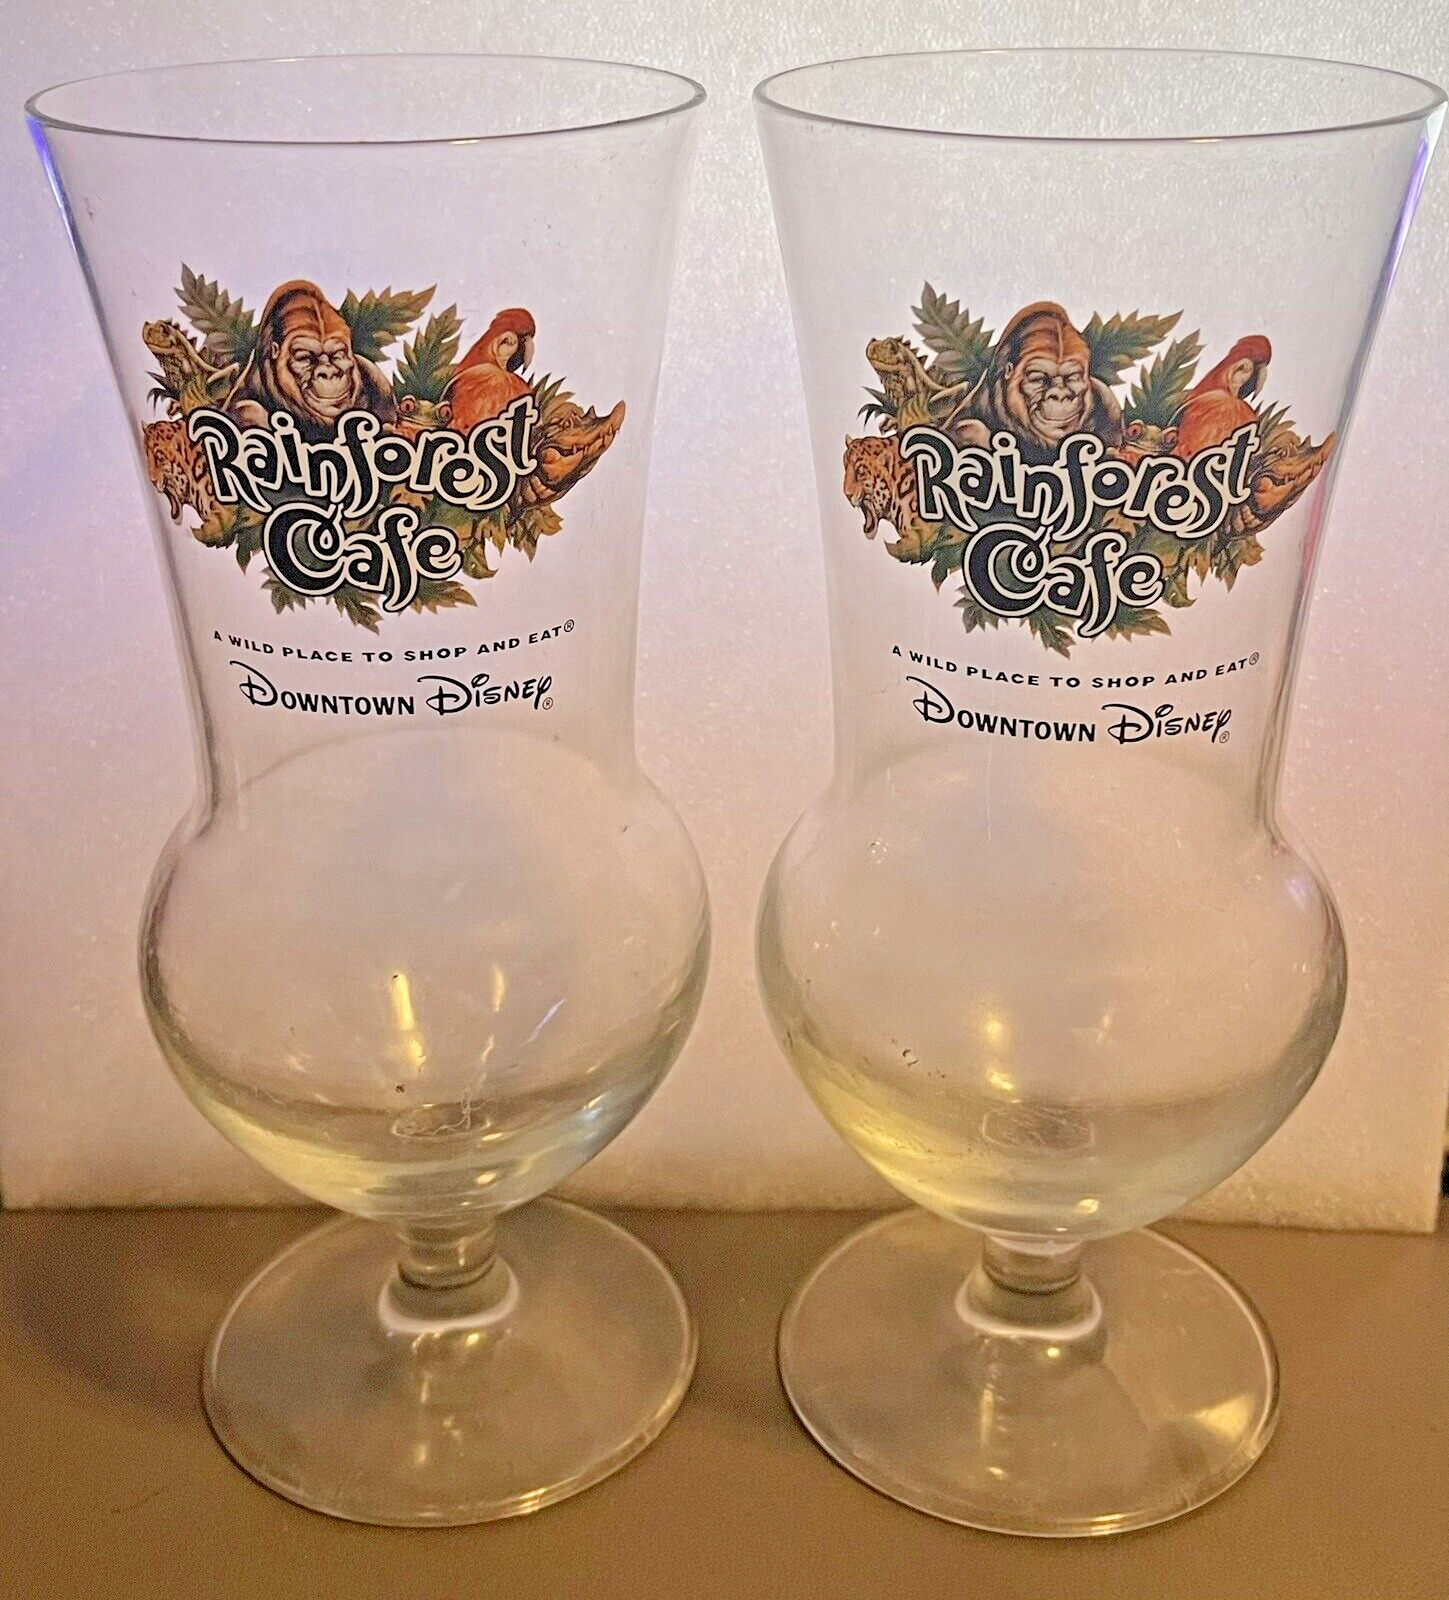 Set 2 Rainforest Cafe Downtown Disneyland Collectible Glassware Hurricane Glass